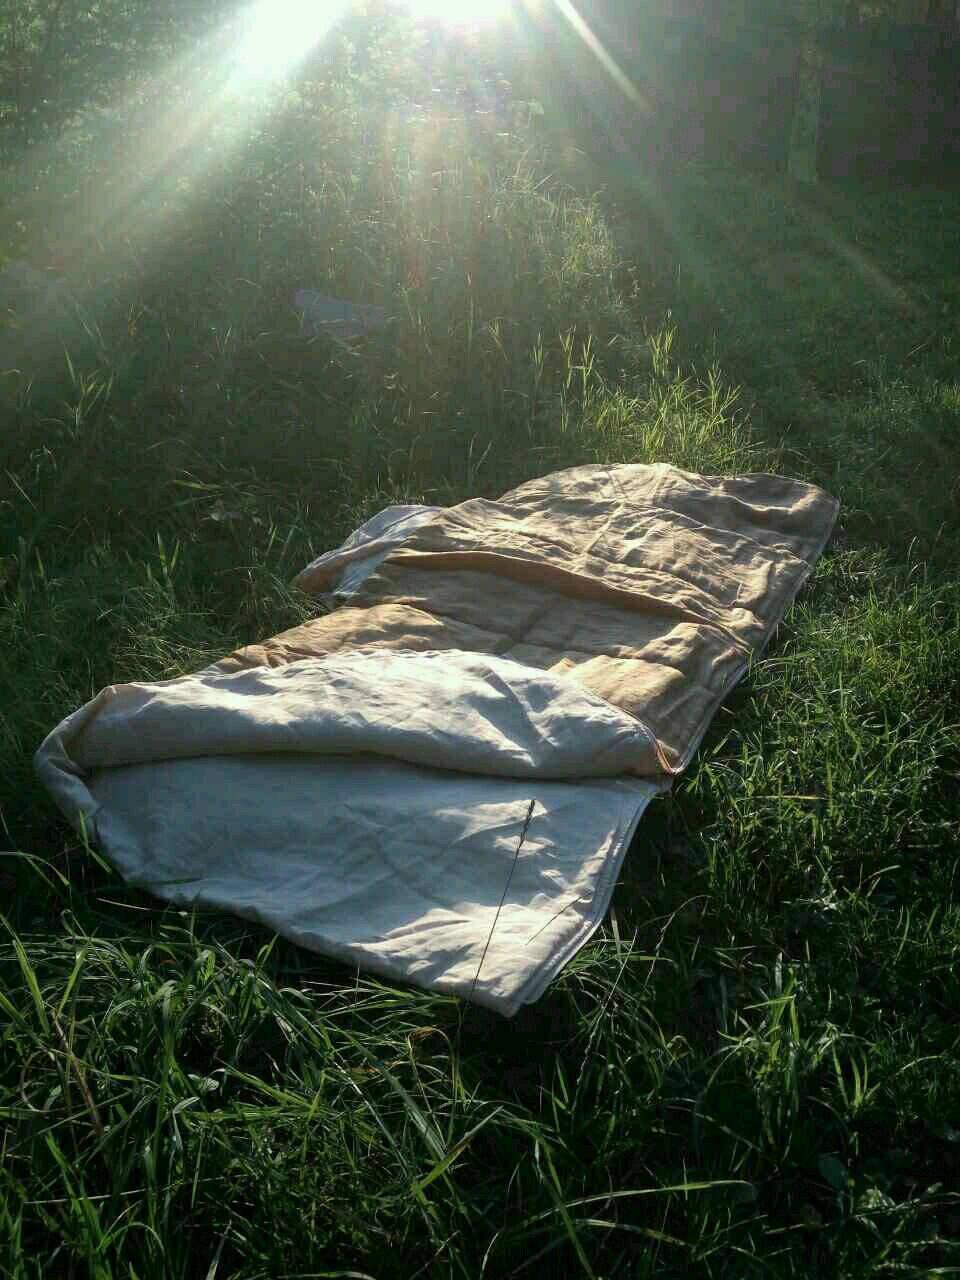 Easy Organic HEMP Sleeping bag in linen fabric- organic hemp fiber filling + linen fabric - hand made